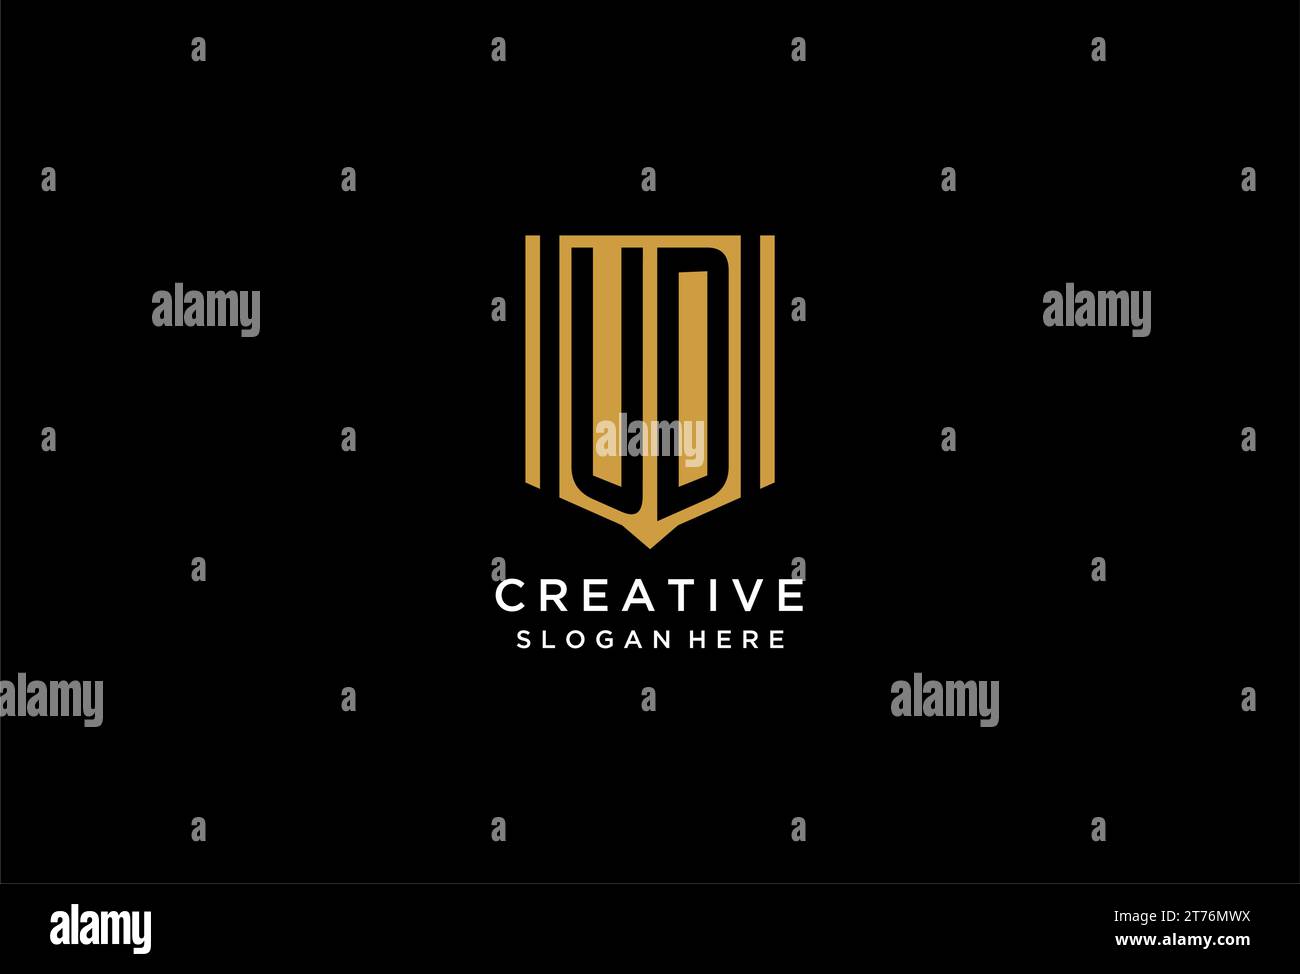 UD monogram logo with geometric shield icon design inspiration Stock Vector